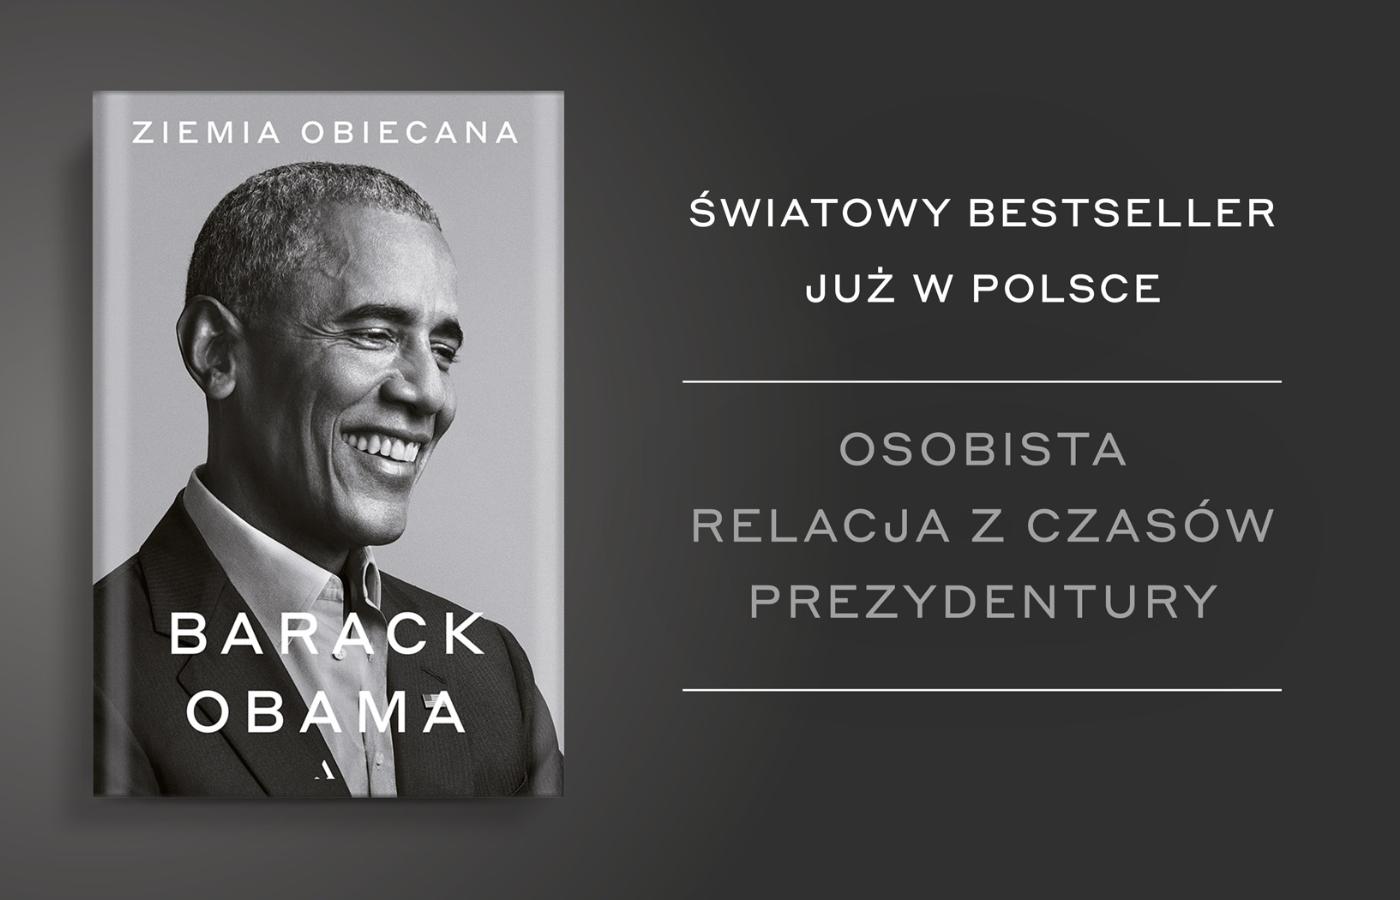 Autobiografia Baracka Obamy „Ziemia obiecana”